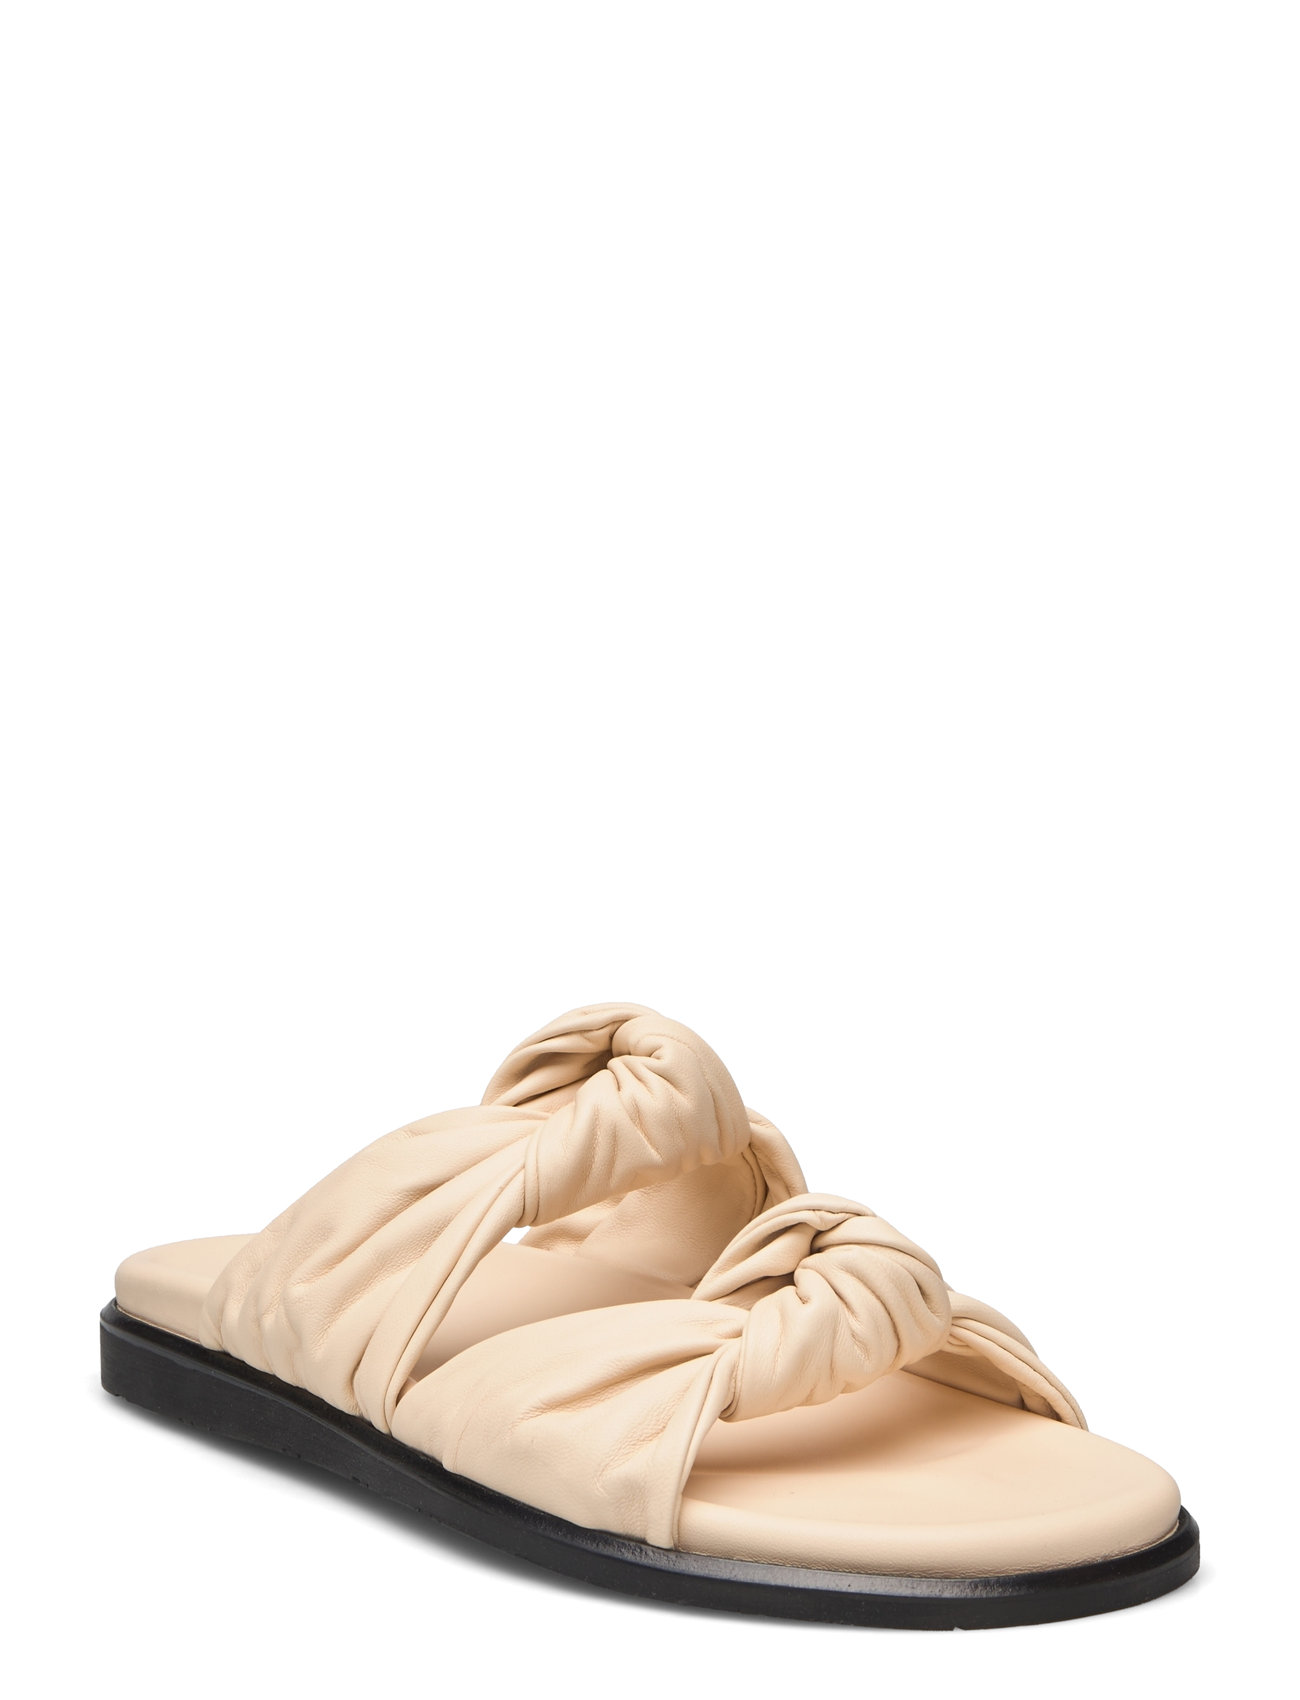 Tye Slide Designers Sandals Flat Beige DEAR FRANCES